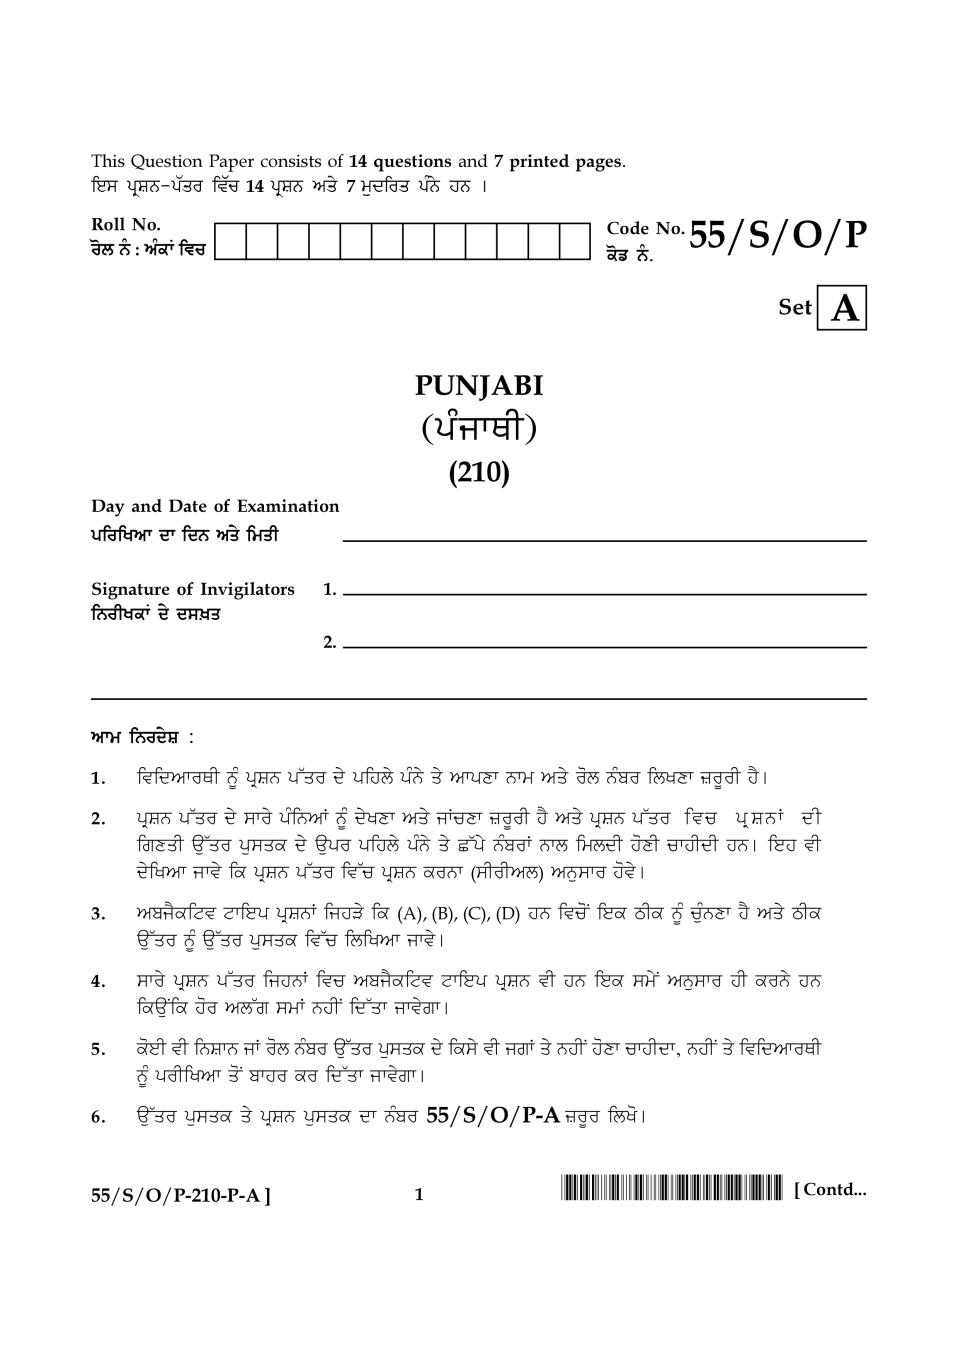 NIOS Class 10 Question Paper Oct 2017 - Punjabi - Page 1